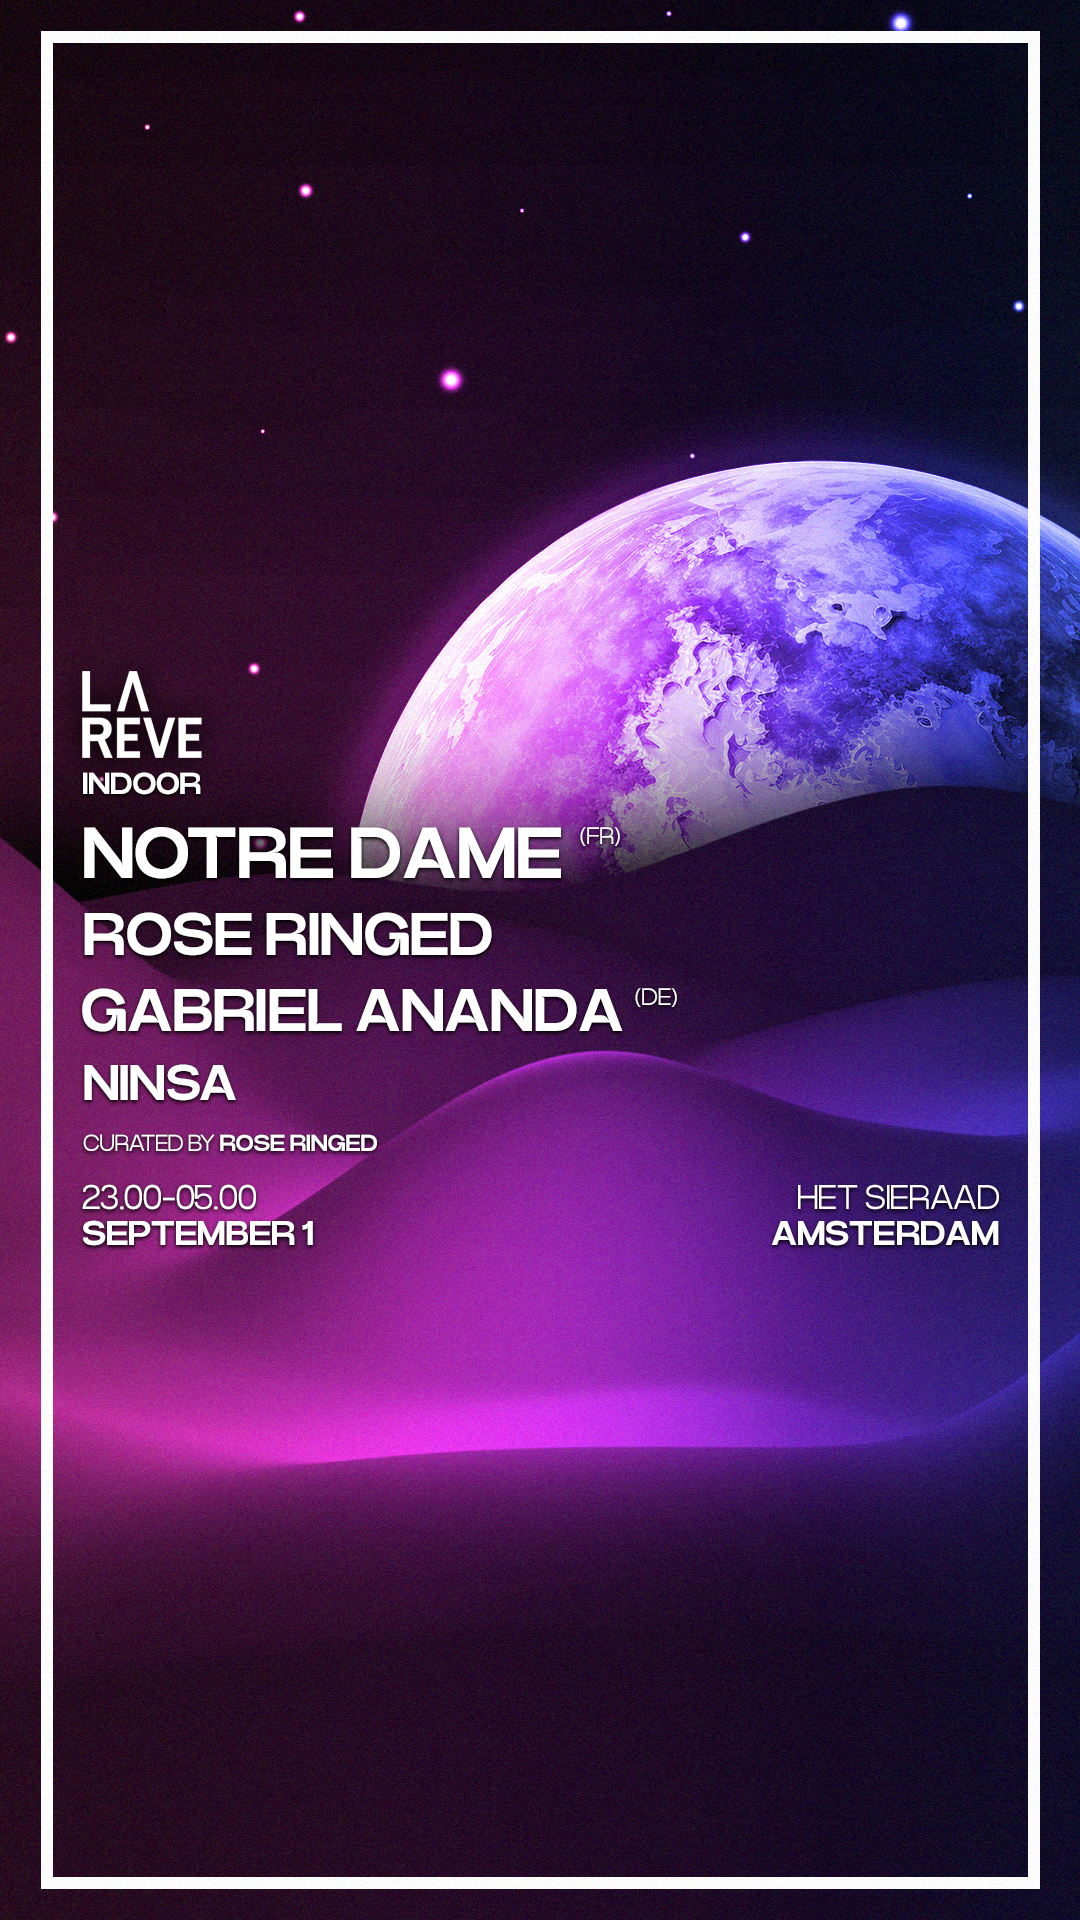 La Rêve /w Notre Dame, Rose Ringed, Gabriel Ananda & Ninsa - フライヤー表